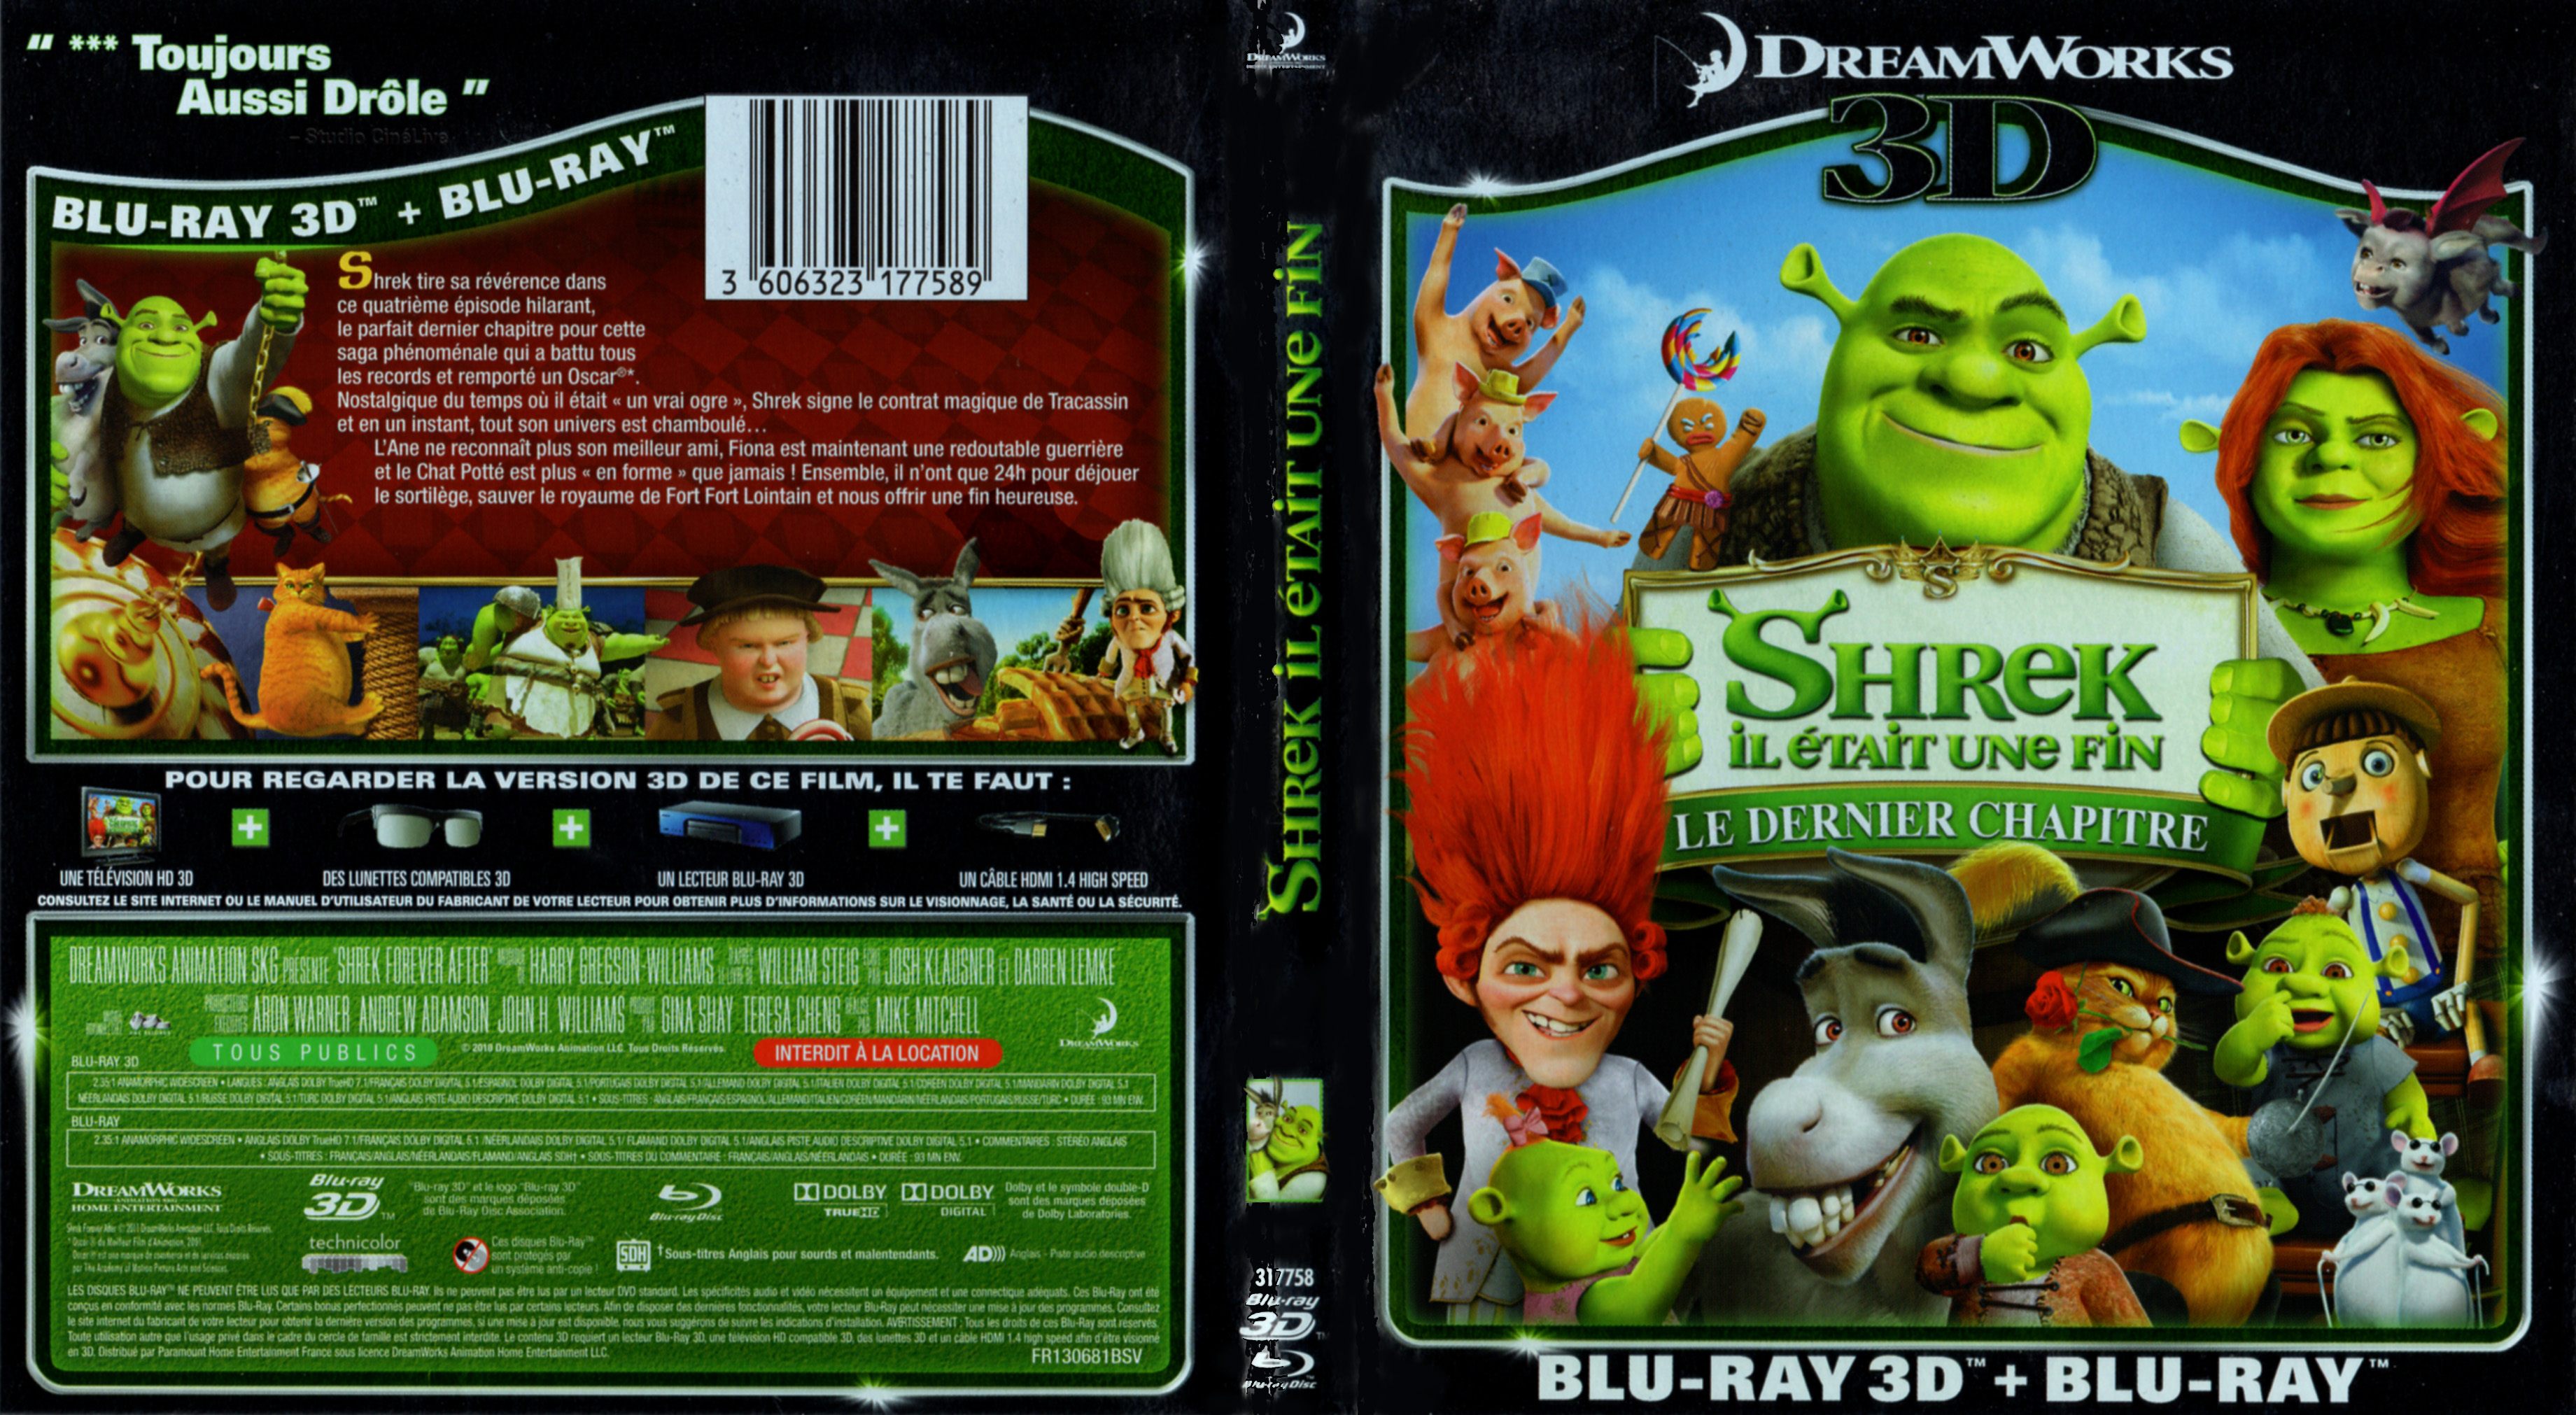 Jaquette DVD Shrek 4 3D (BLU-RAY) v2